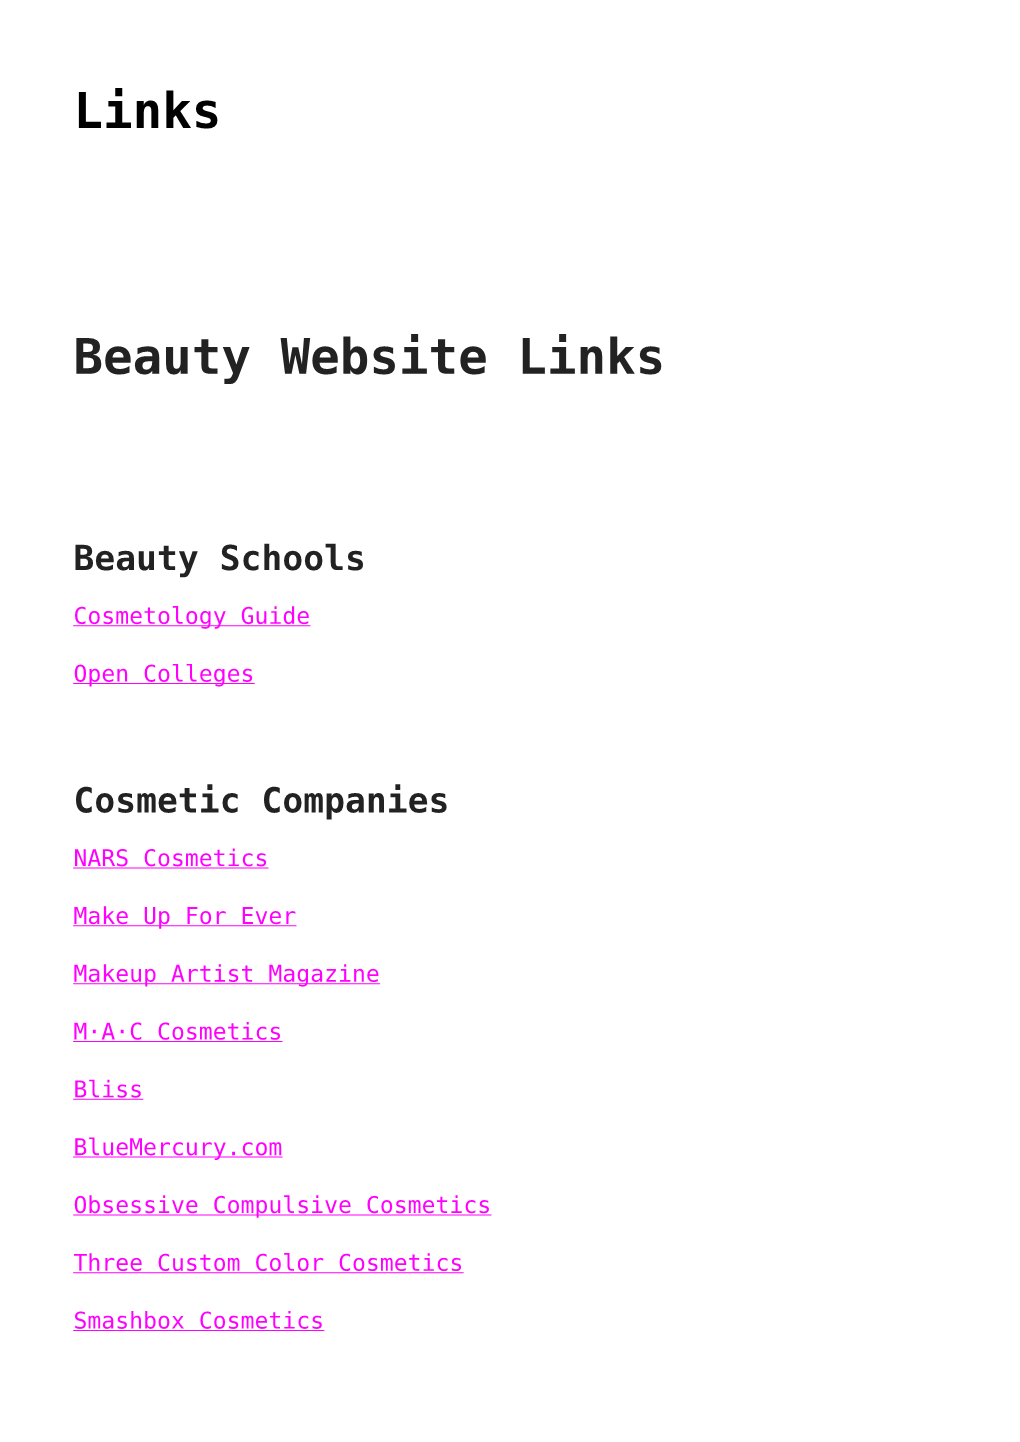 Links Beauty Website Links